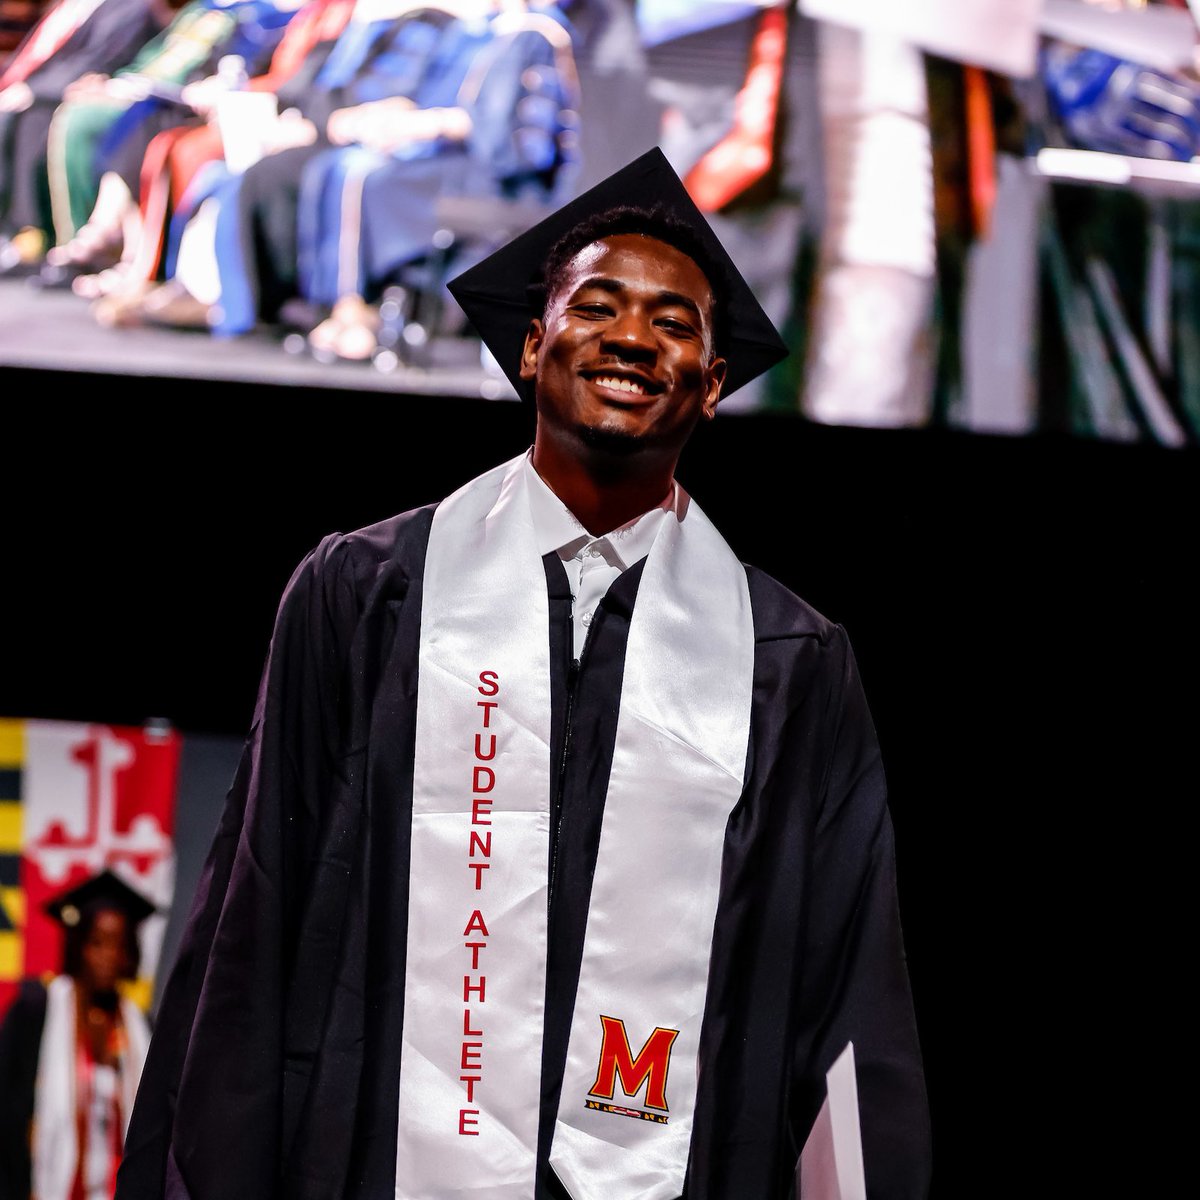 University of Maryland Graduate Jordan Geronimo 👏👏 @JordanGeronimo2